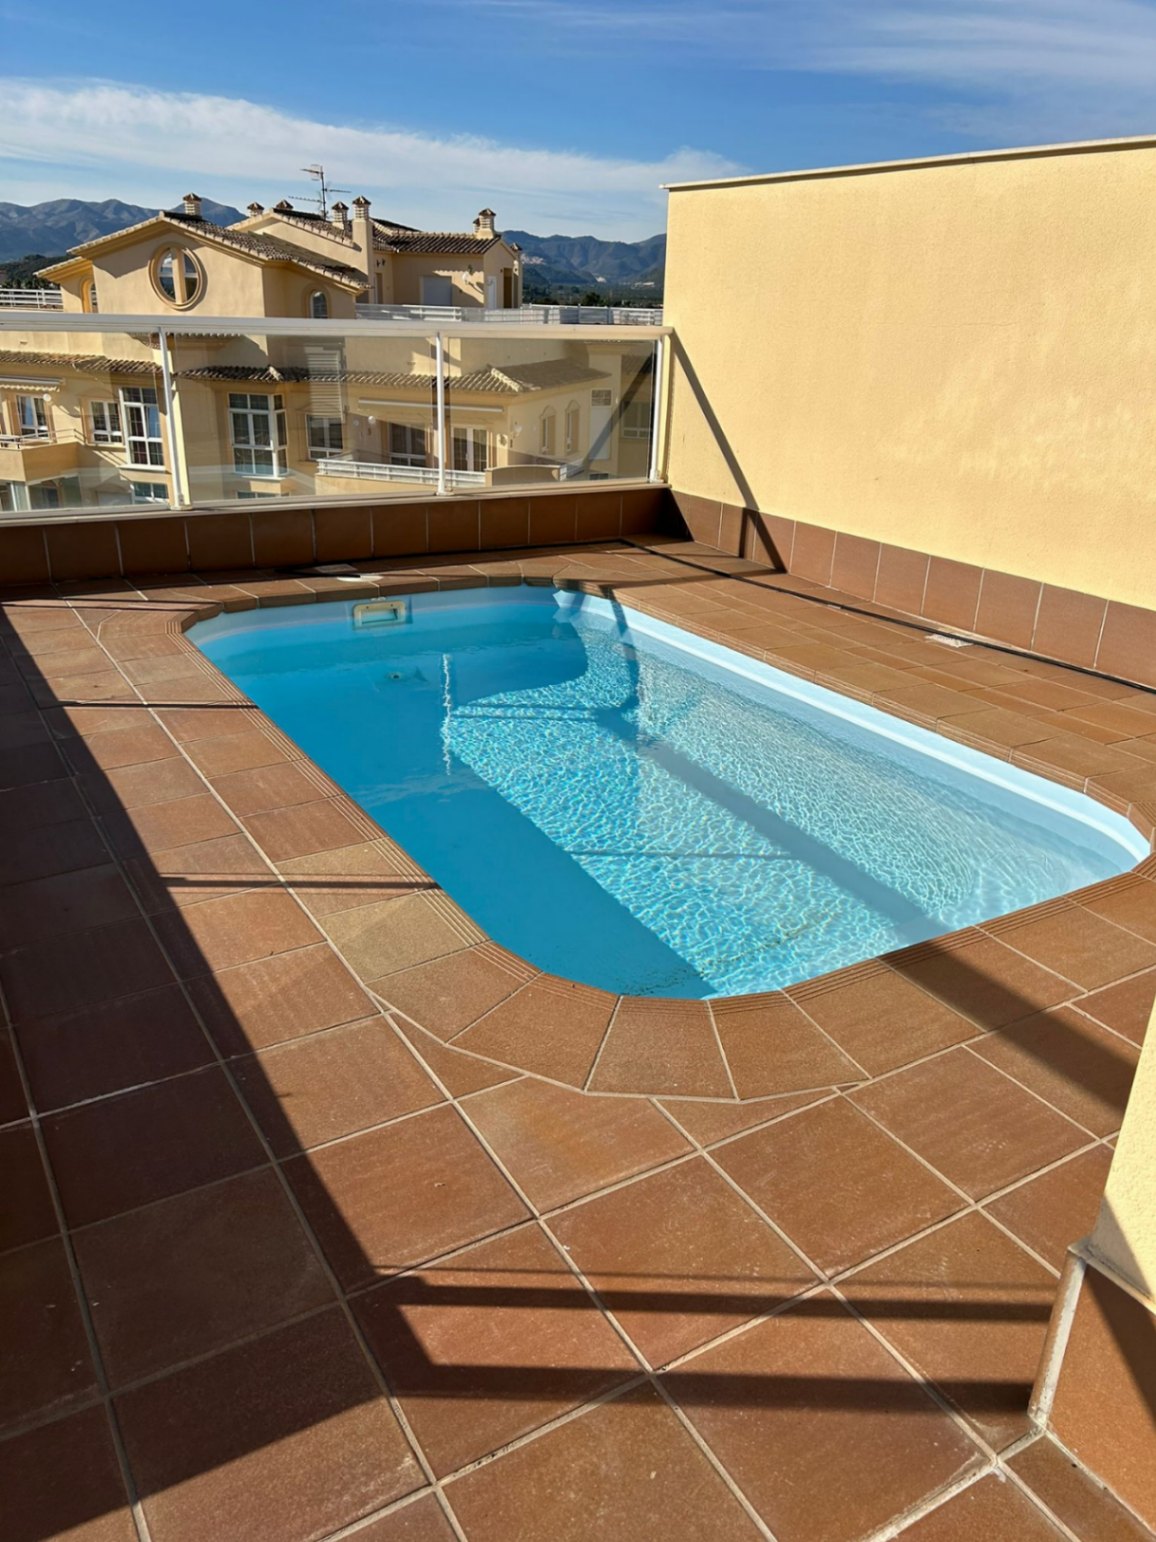 SUPER ATICO EN VENTA Oliva Nova Golf  Resort con piscina privada.